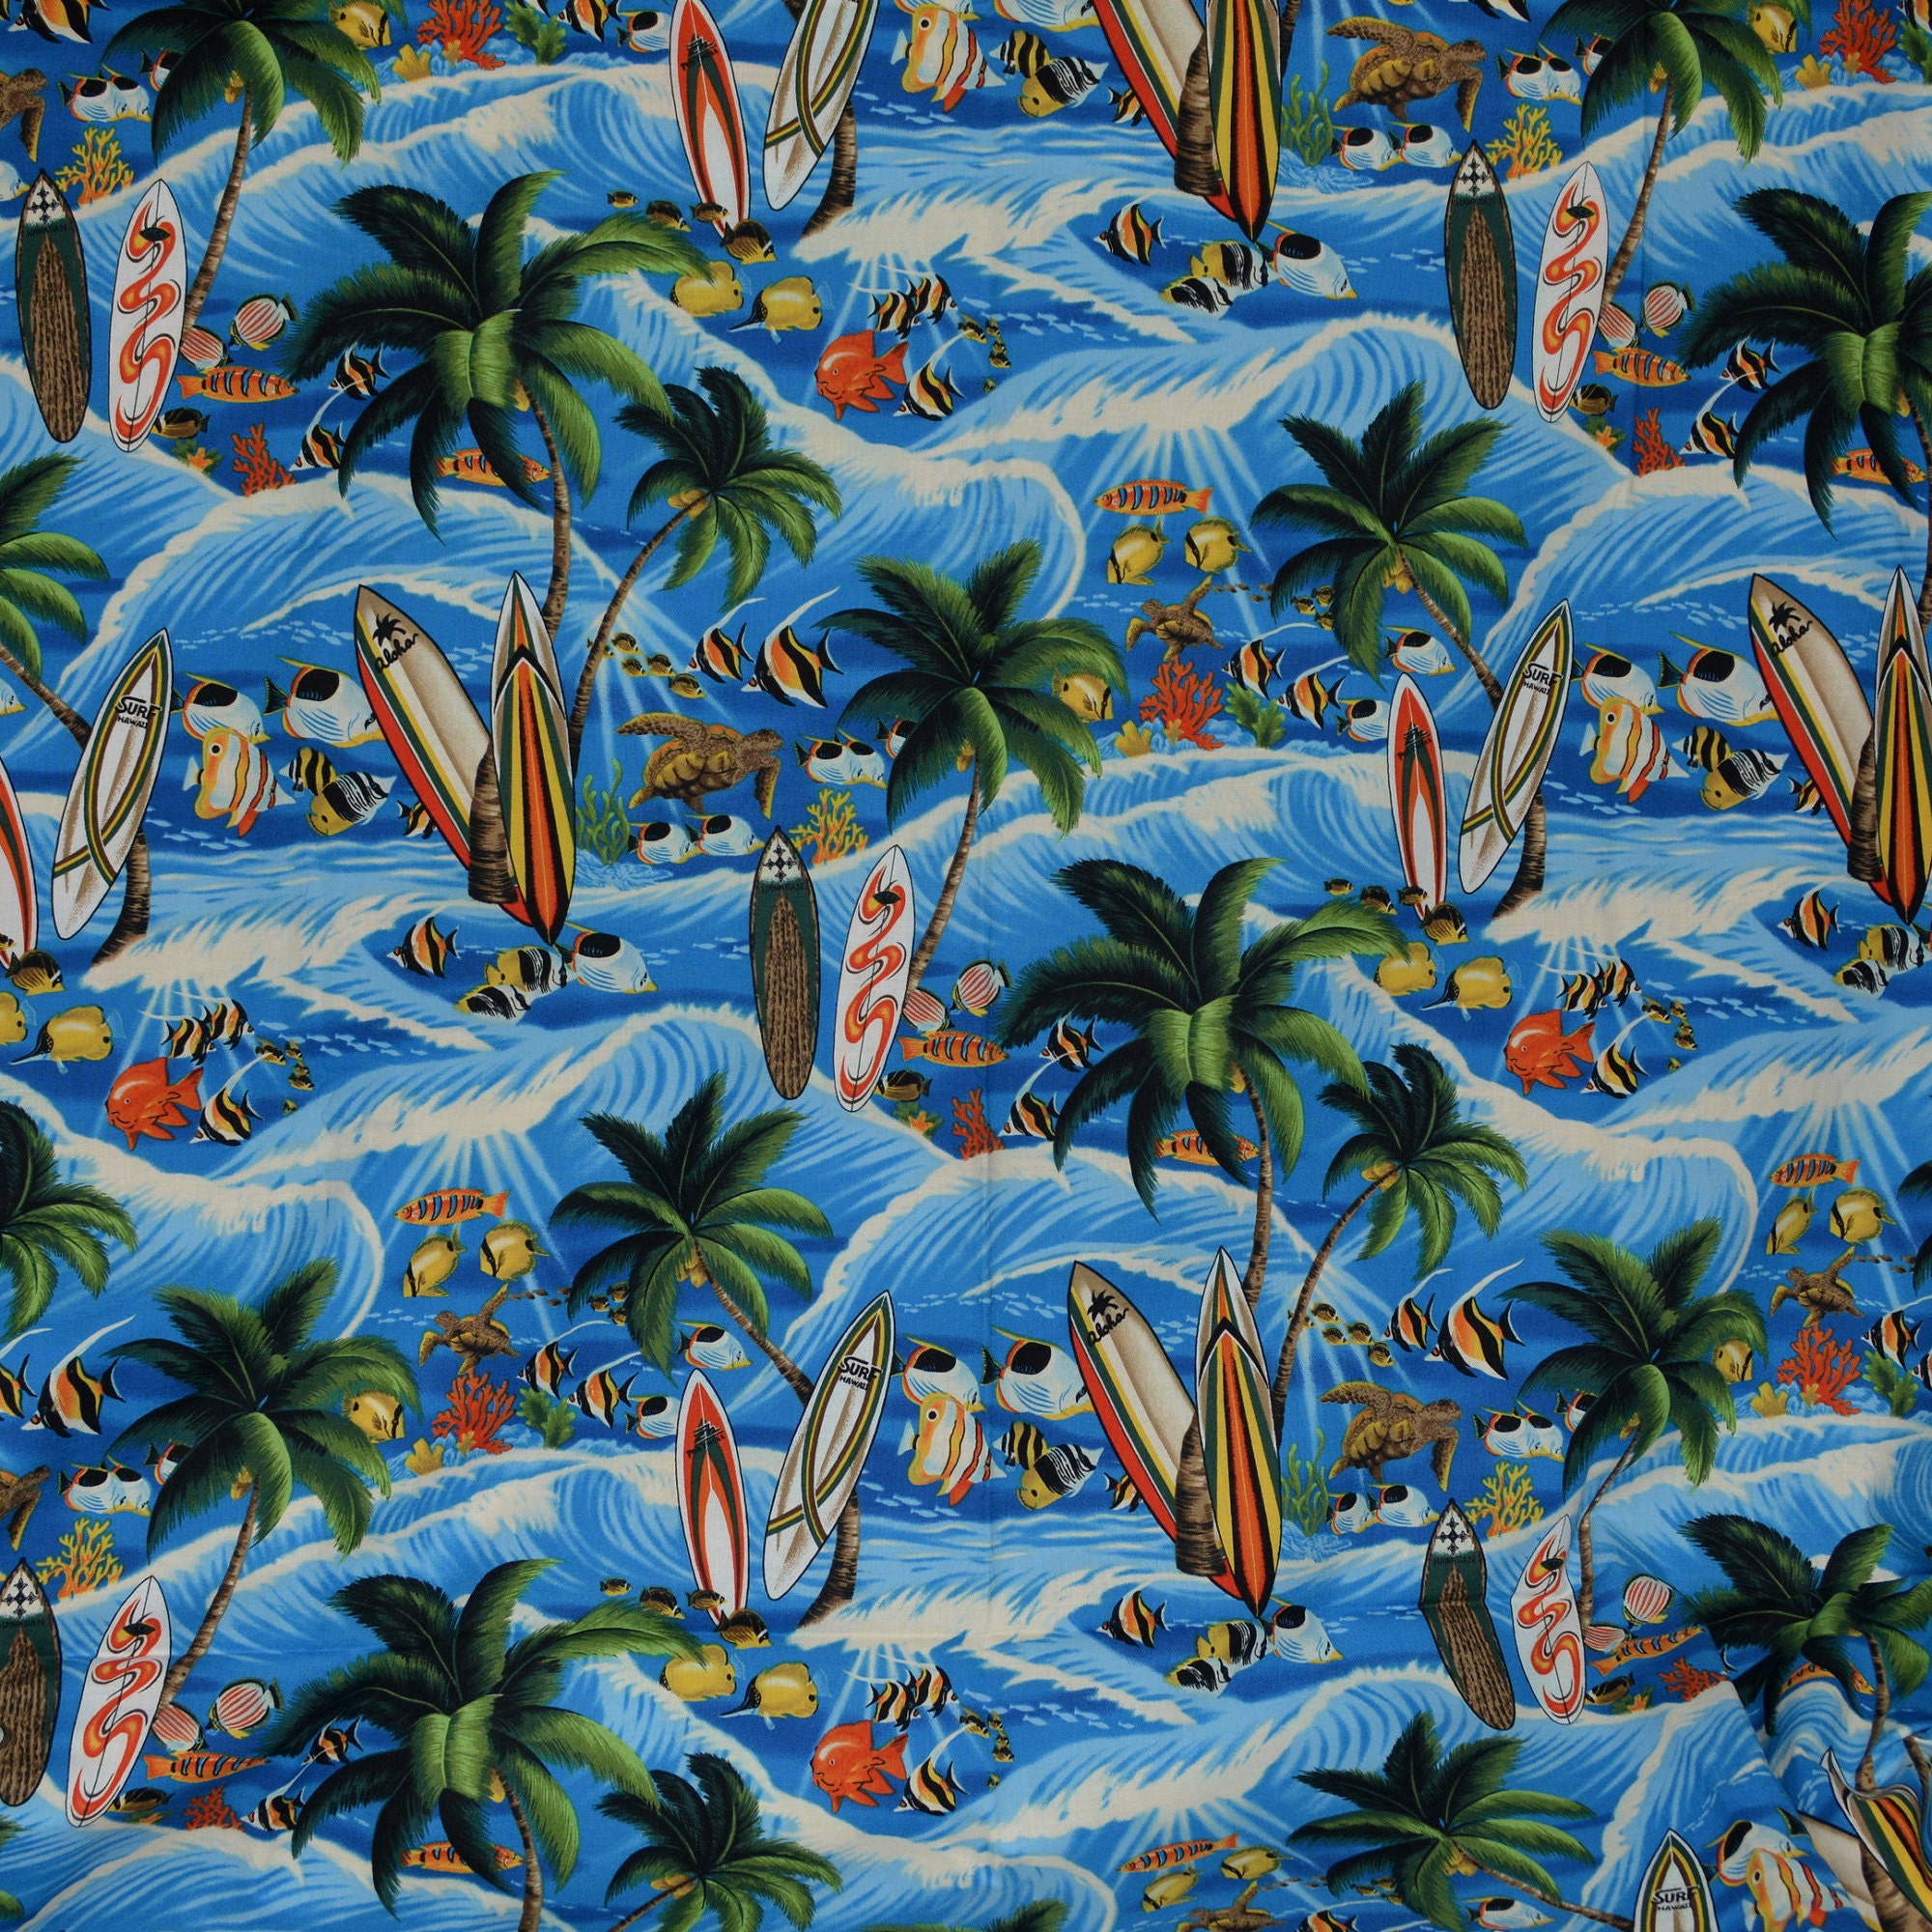 1990s Trendtex vintage fabric, Hawaiian fabric with surfboards